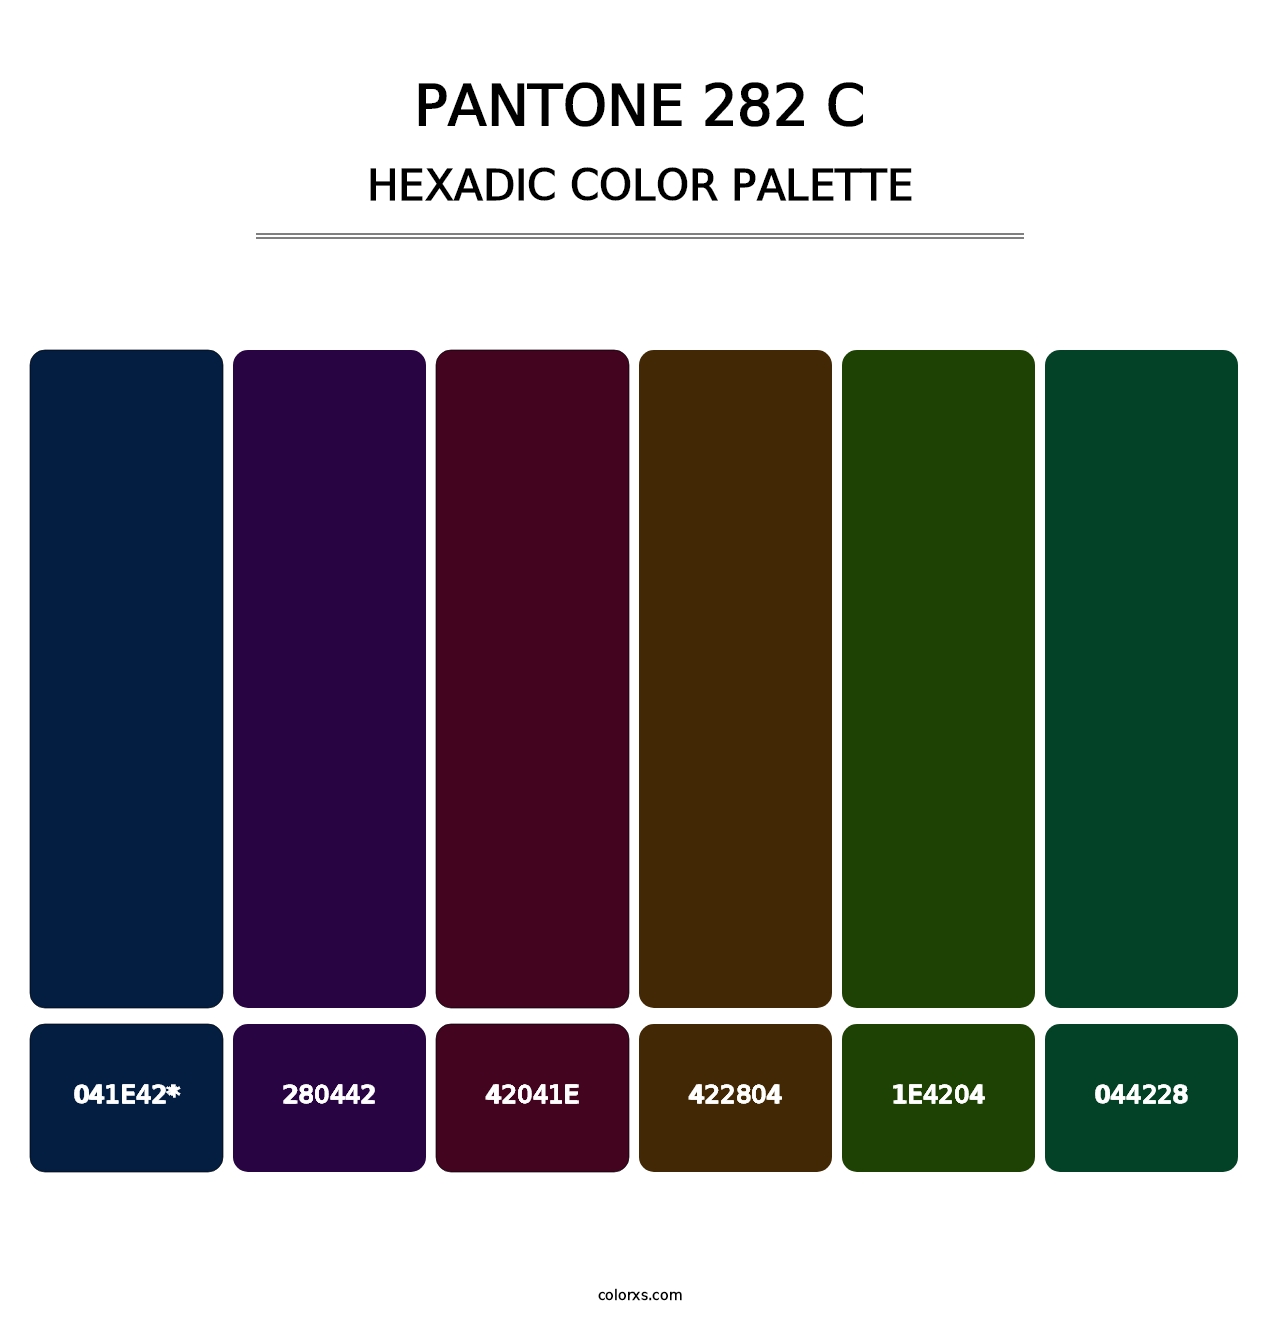 PANTONE 282 C - Hexadic Color Palette